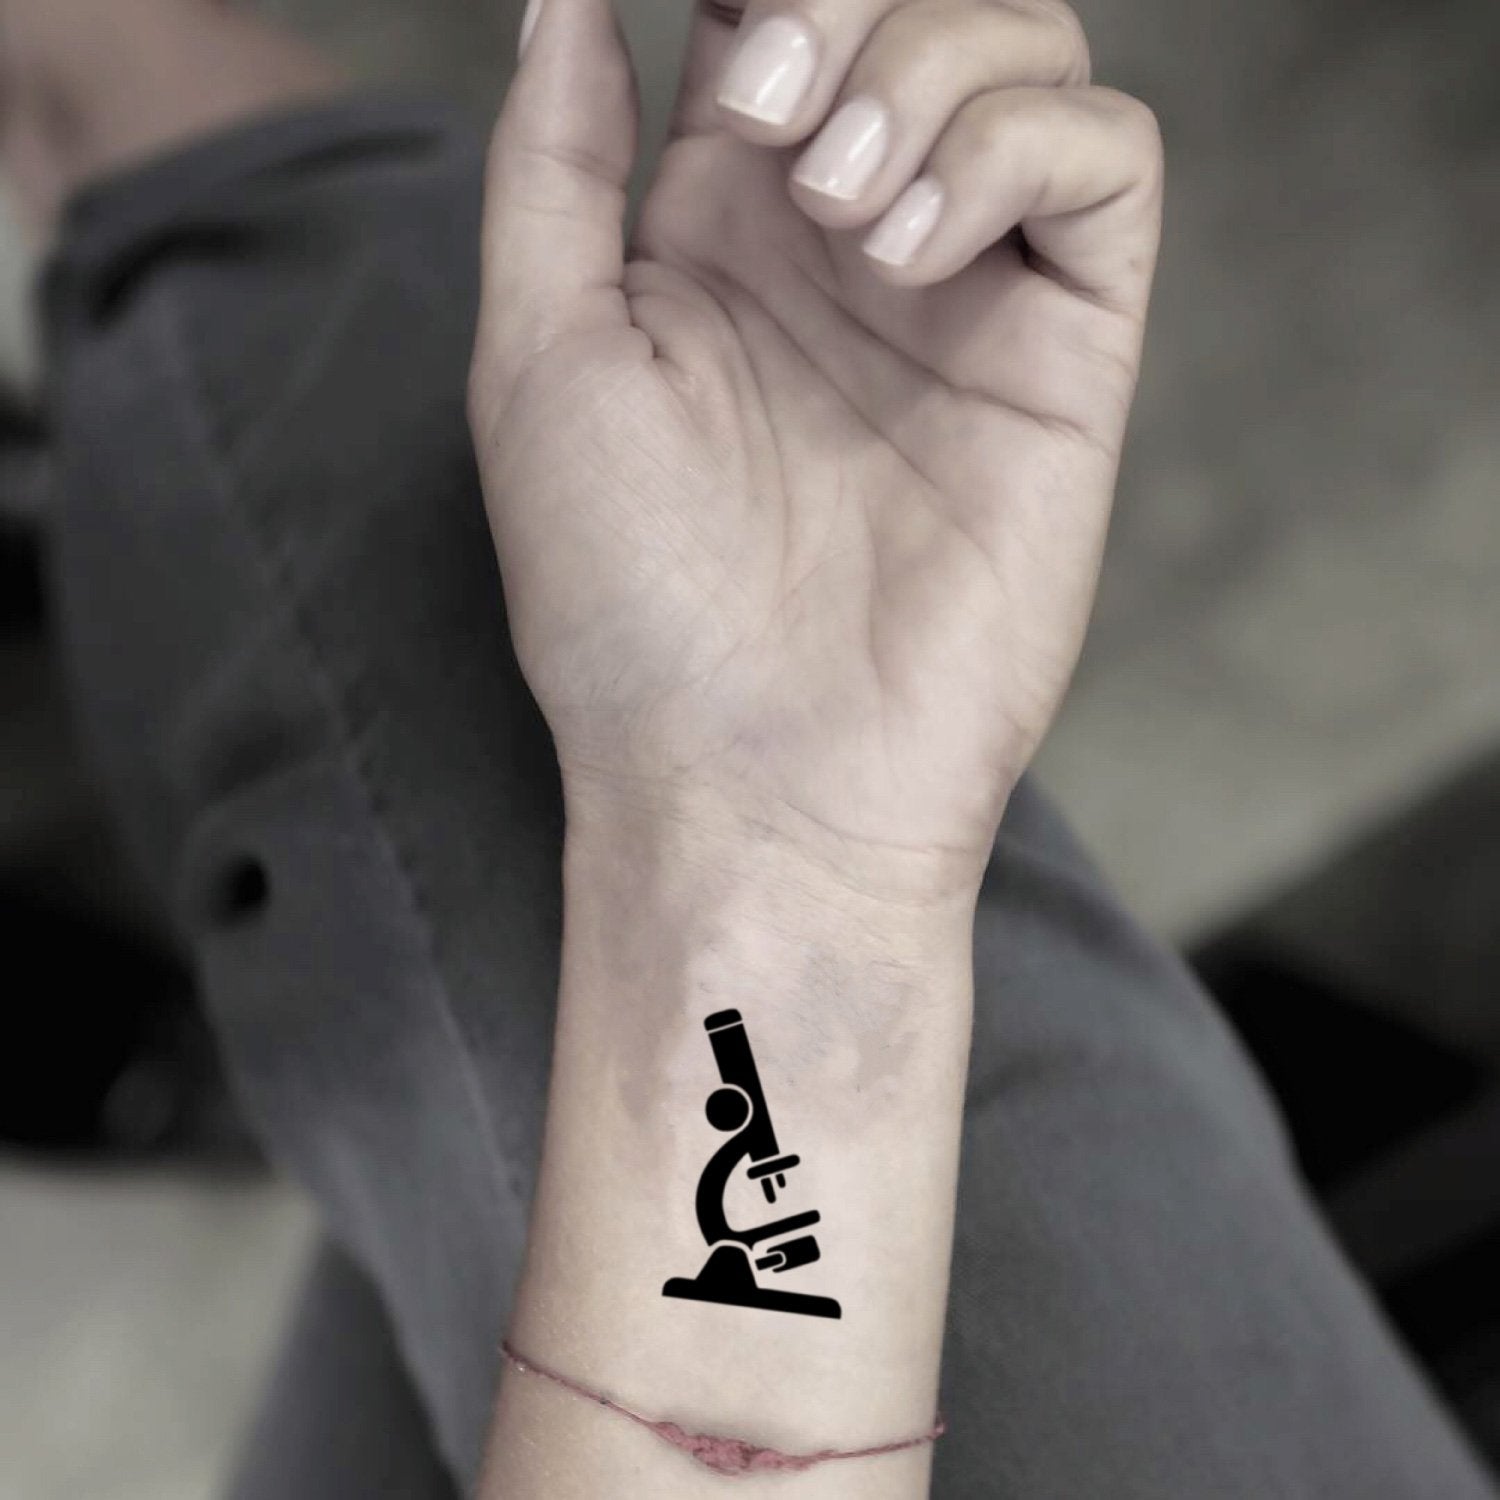 fake small microscope illustrative temporary tattoo sticker design idea on wrist